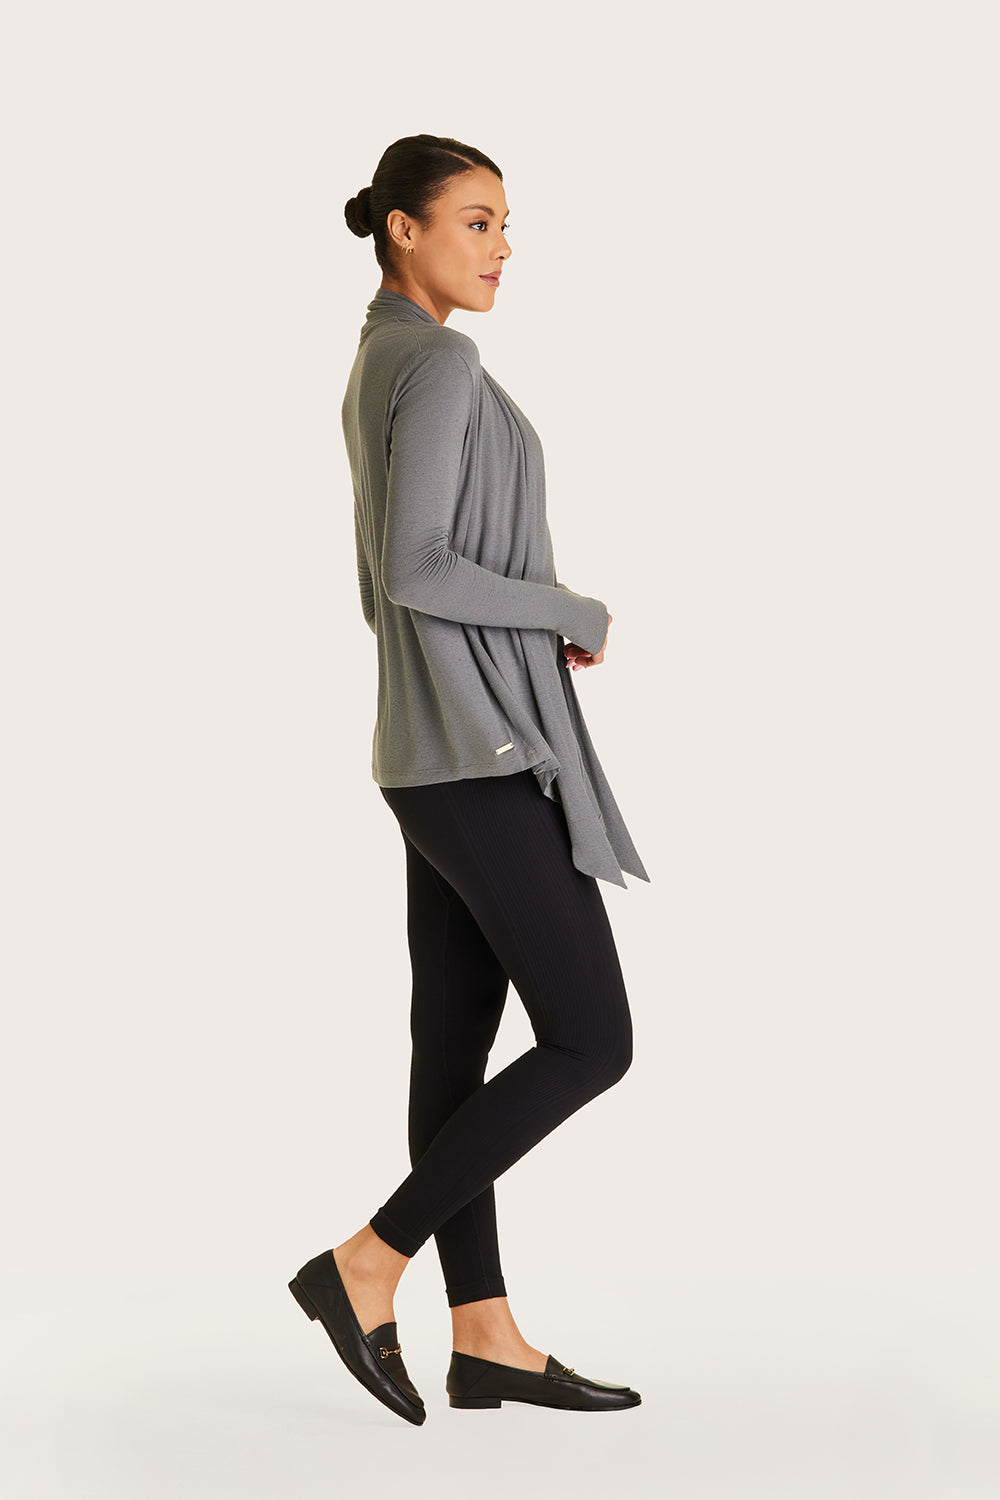 Alala women's cashmere open cardigan in grey